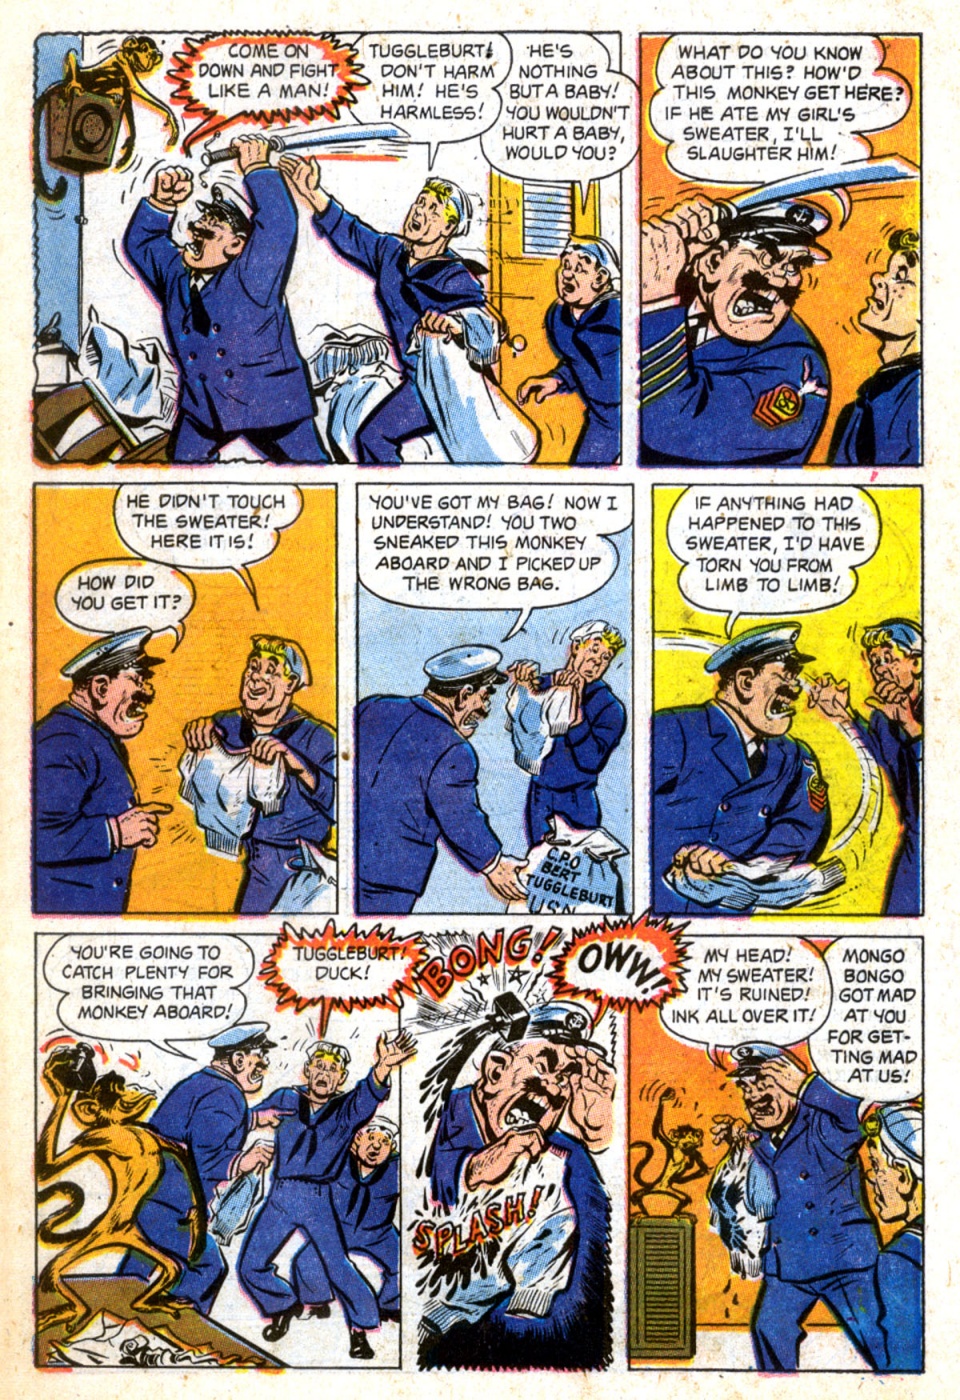 Anchors the Salt Water Daffy - Comics (c) (19)